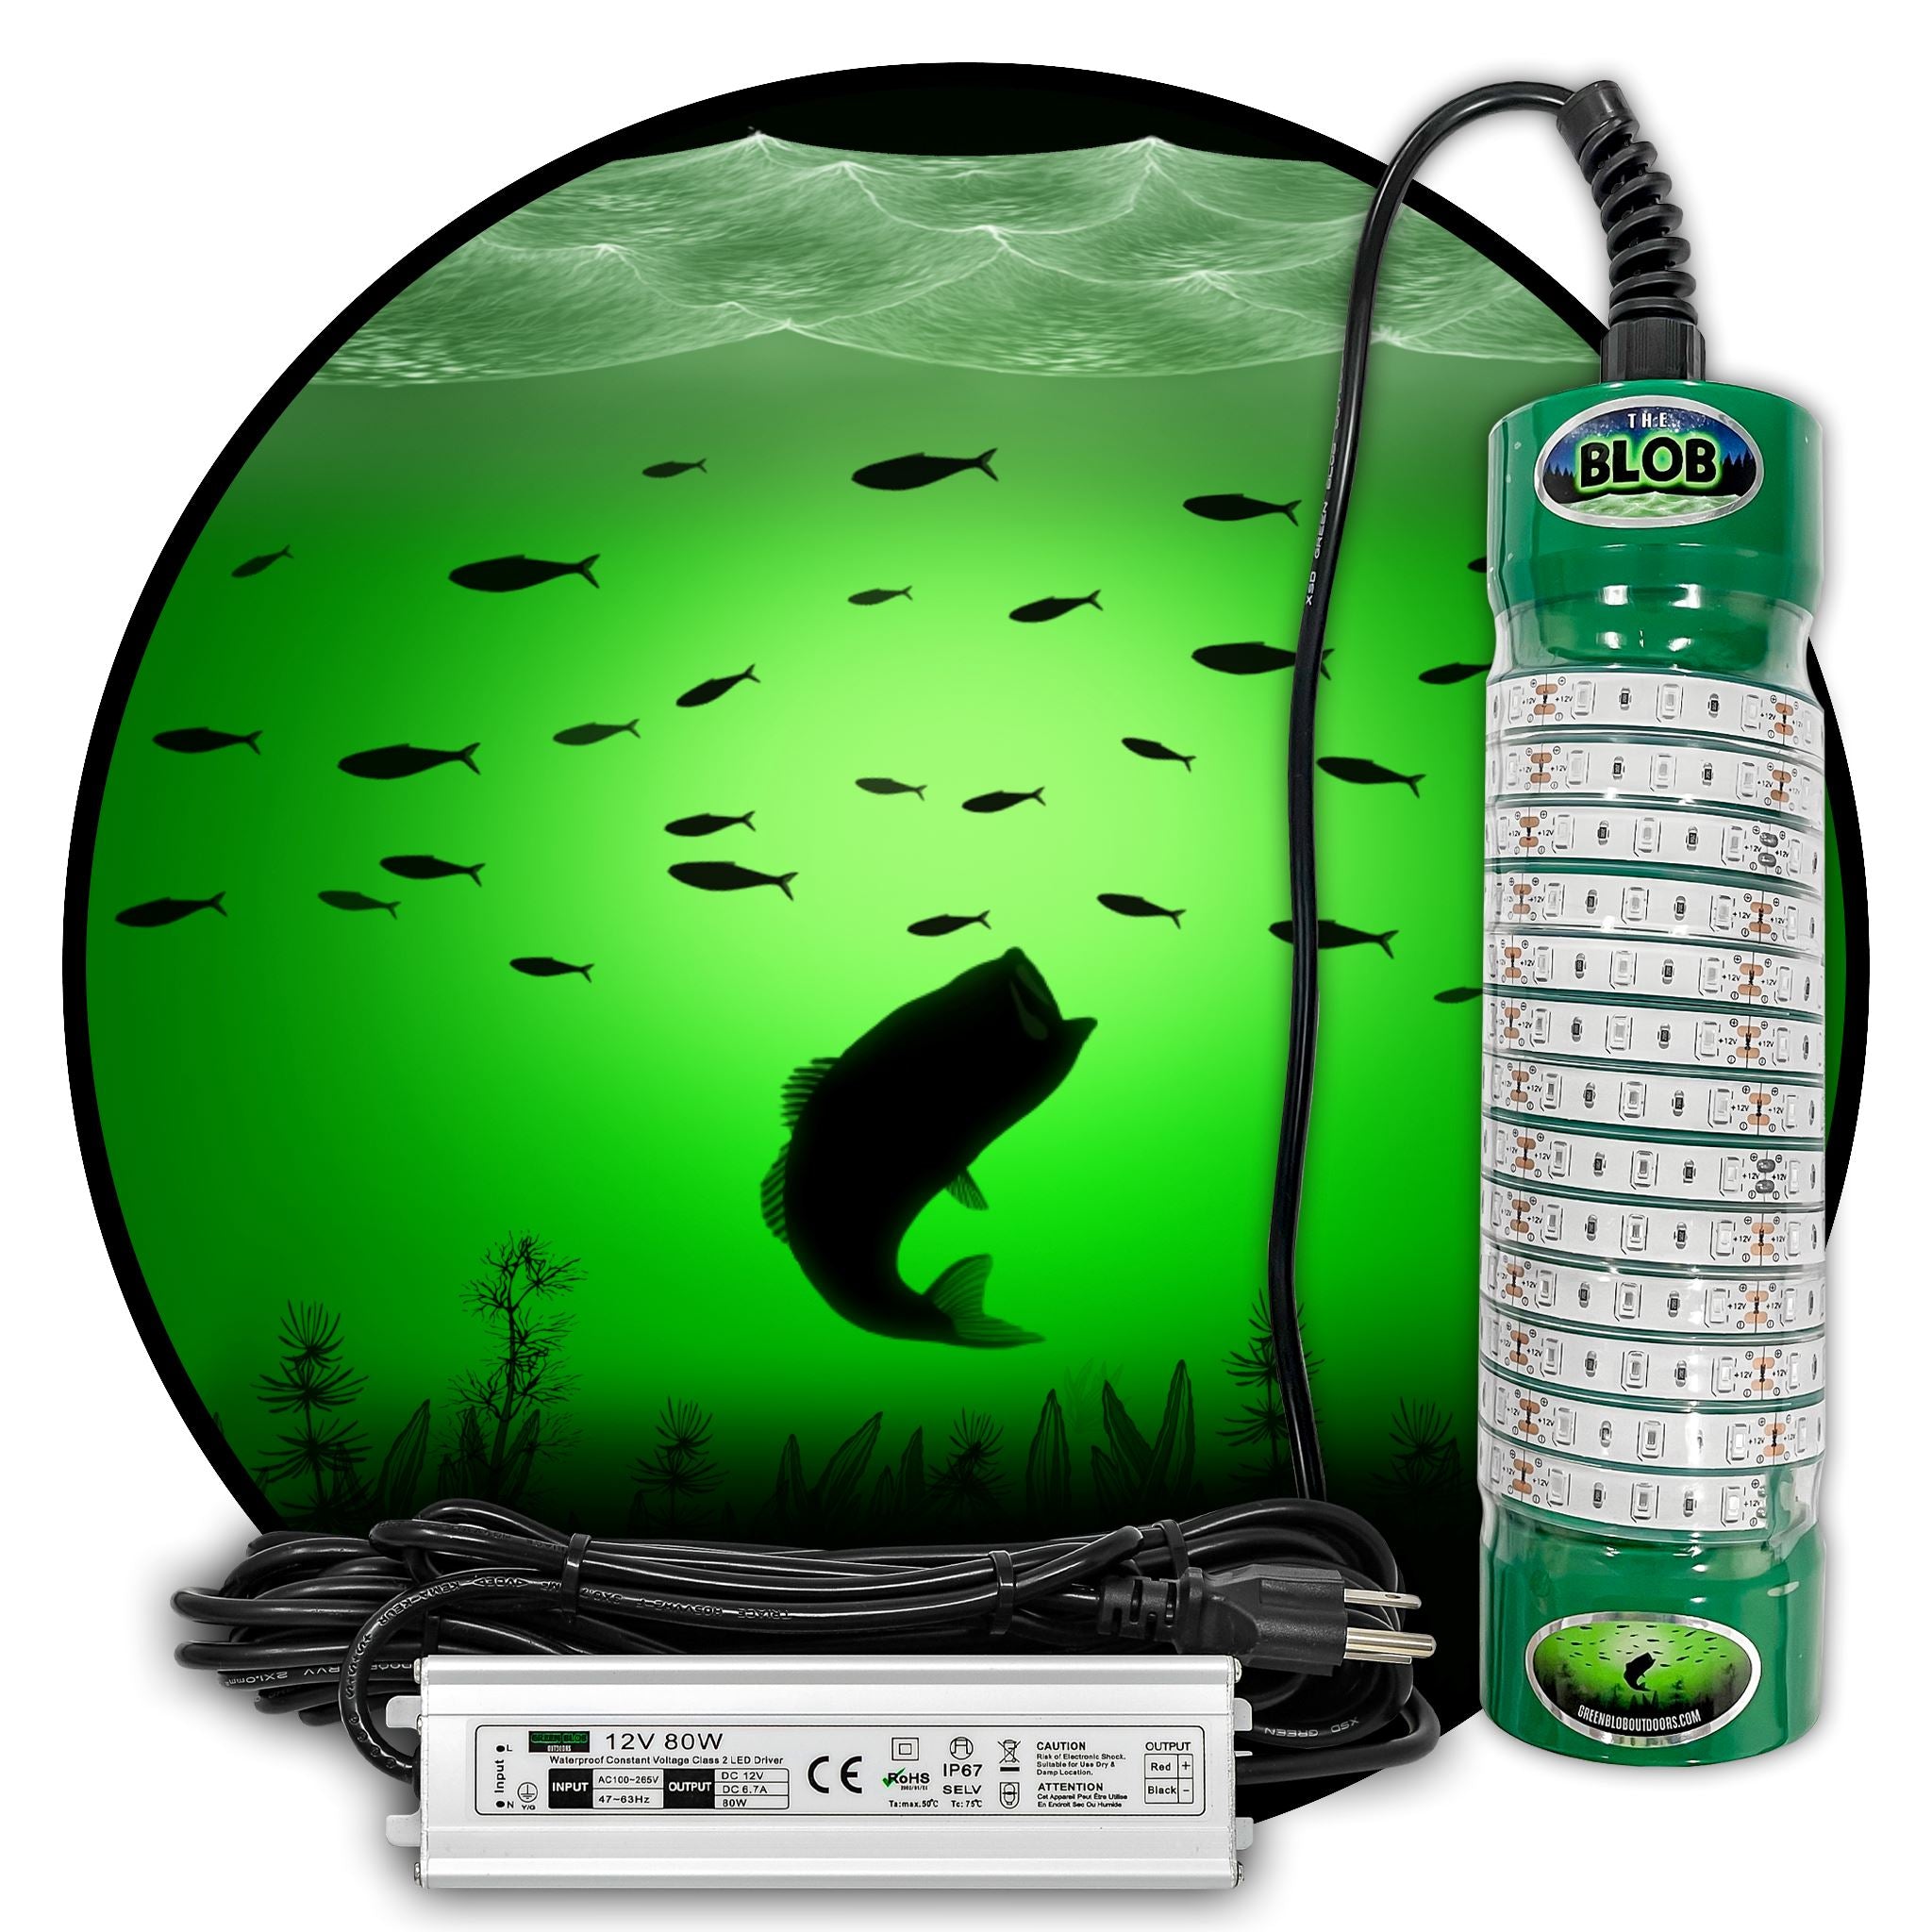 7500 Lumen Green Blob LED Underwater Fishing Light - Durable,  Energy-Efficient, Texas-Made for Saltwater & Freshwater Fishing